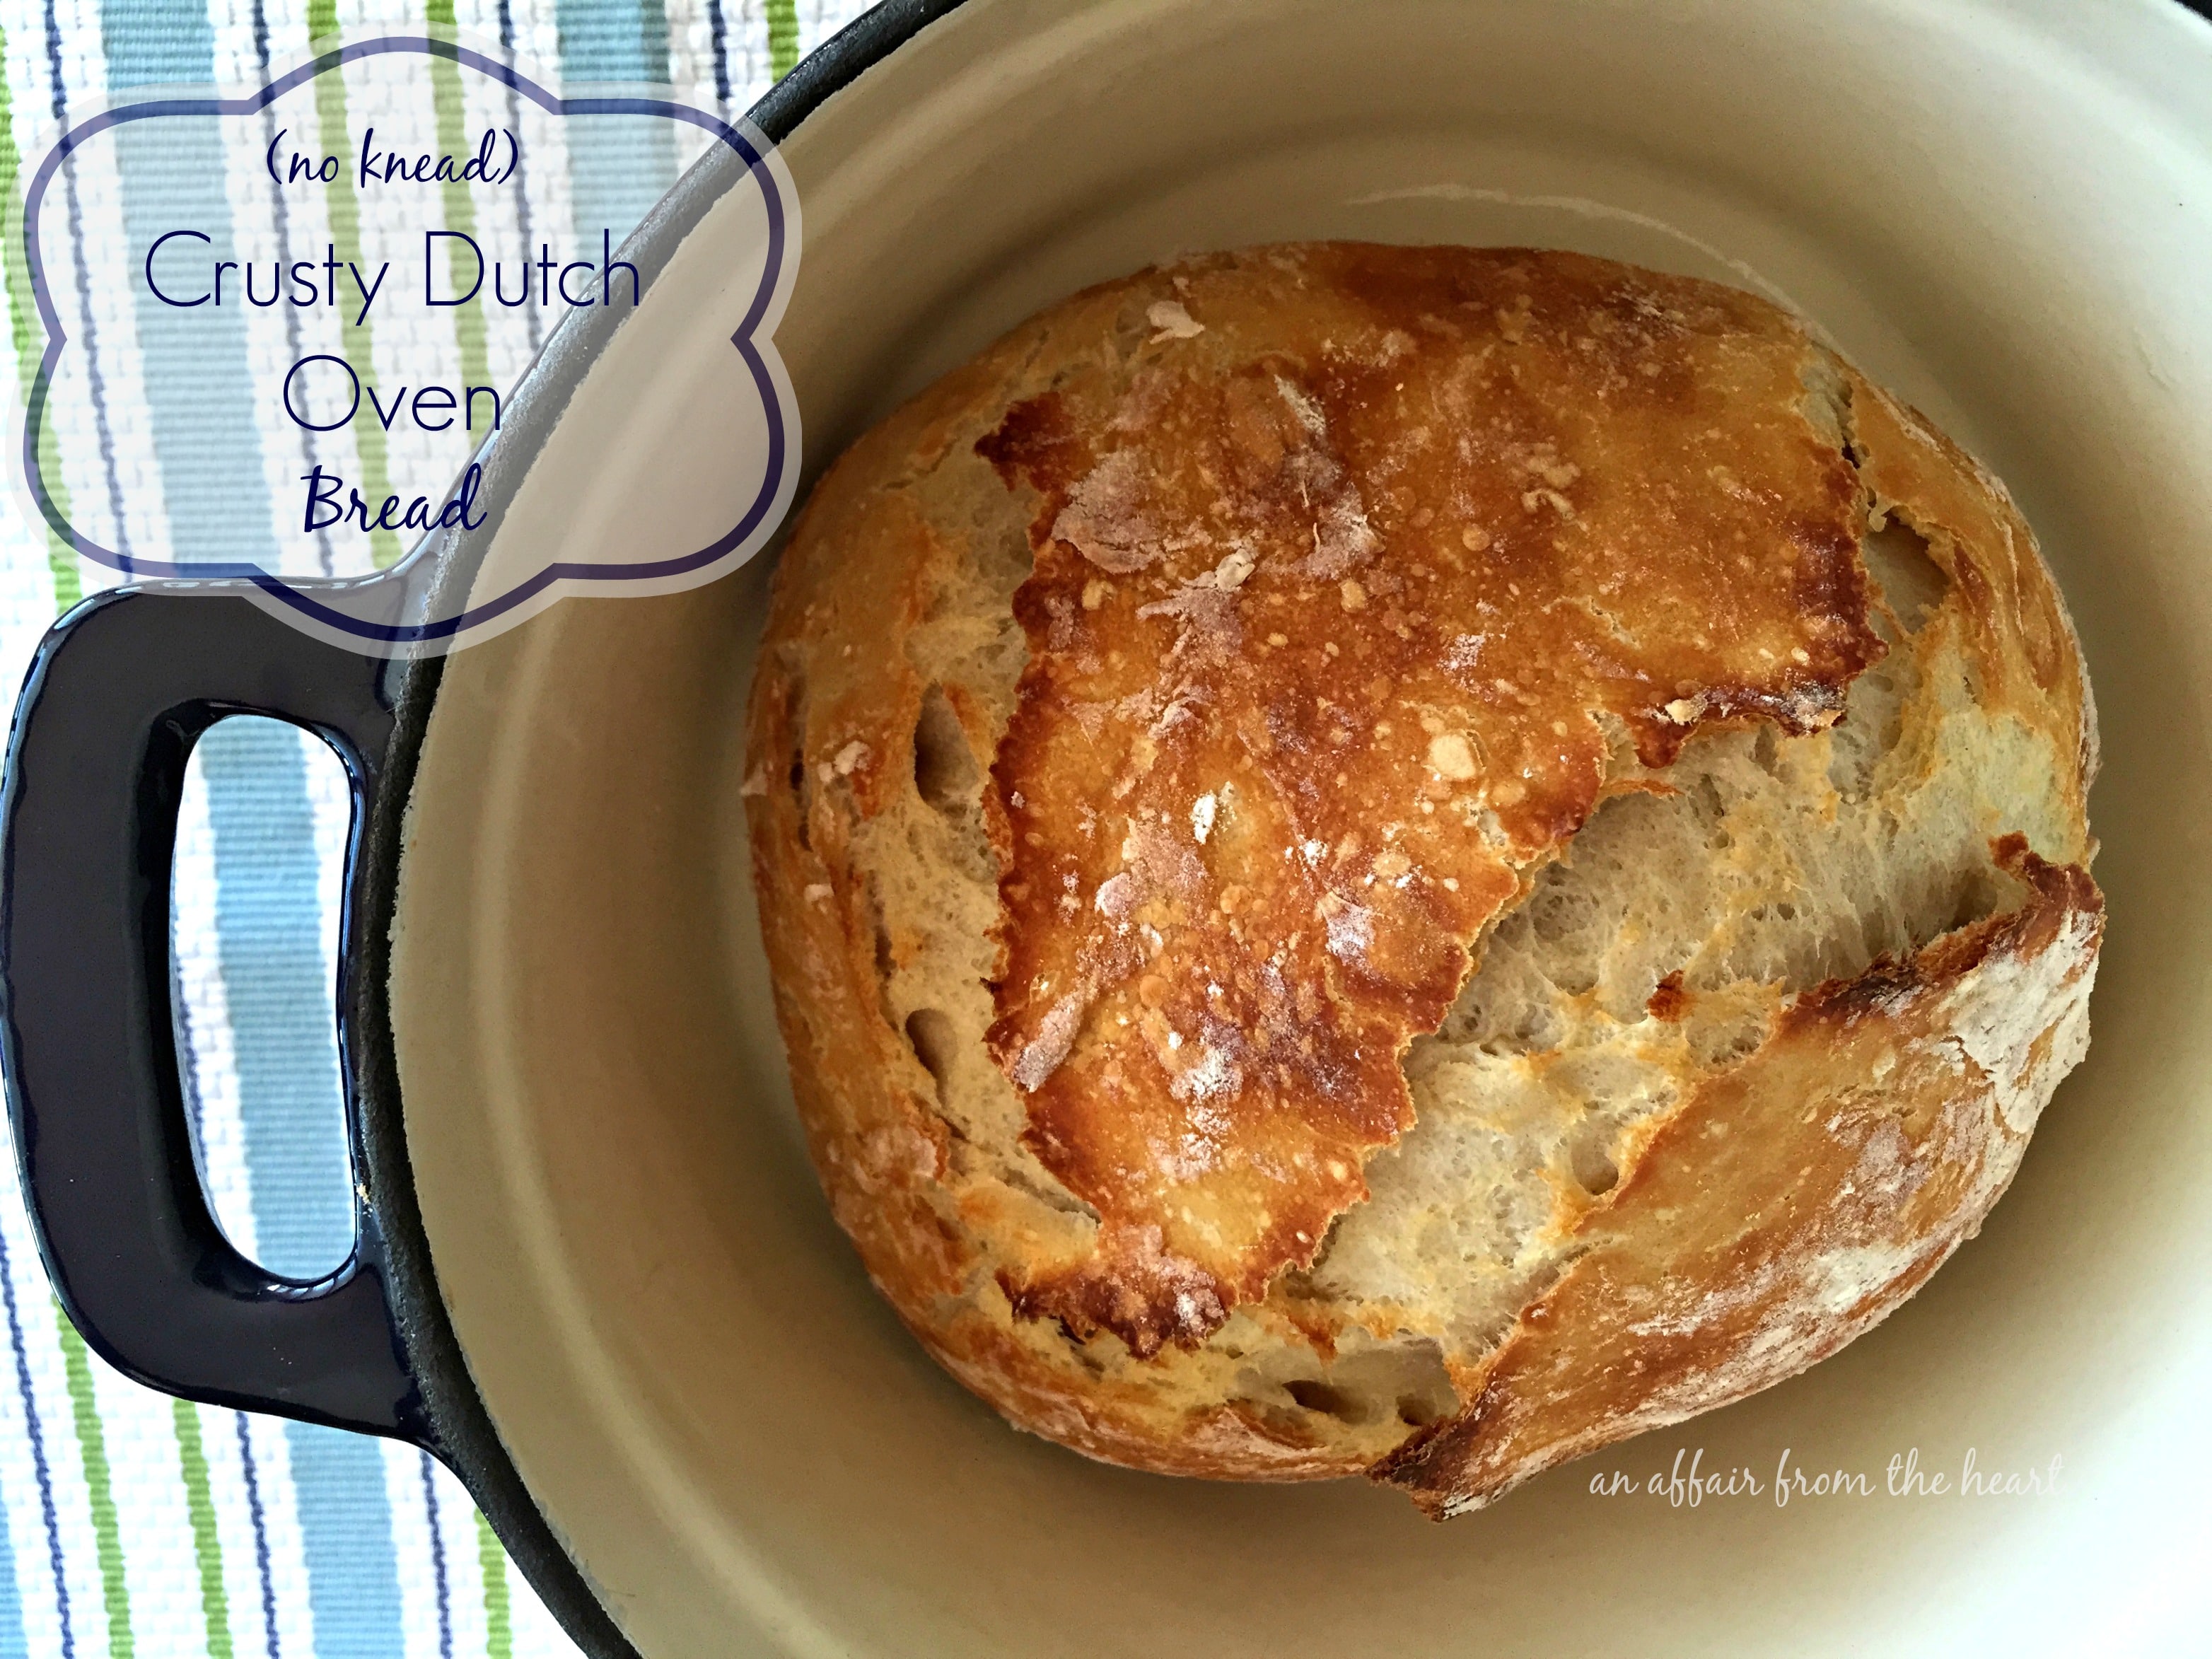 https://anaffairfromtheheart.com/wp-content/uploads/2015/05/No-Knead-Crusty-Dutch-Oven-Bread.jpg